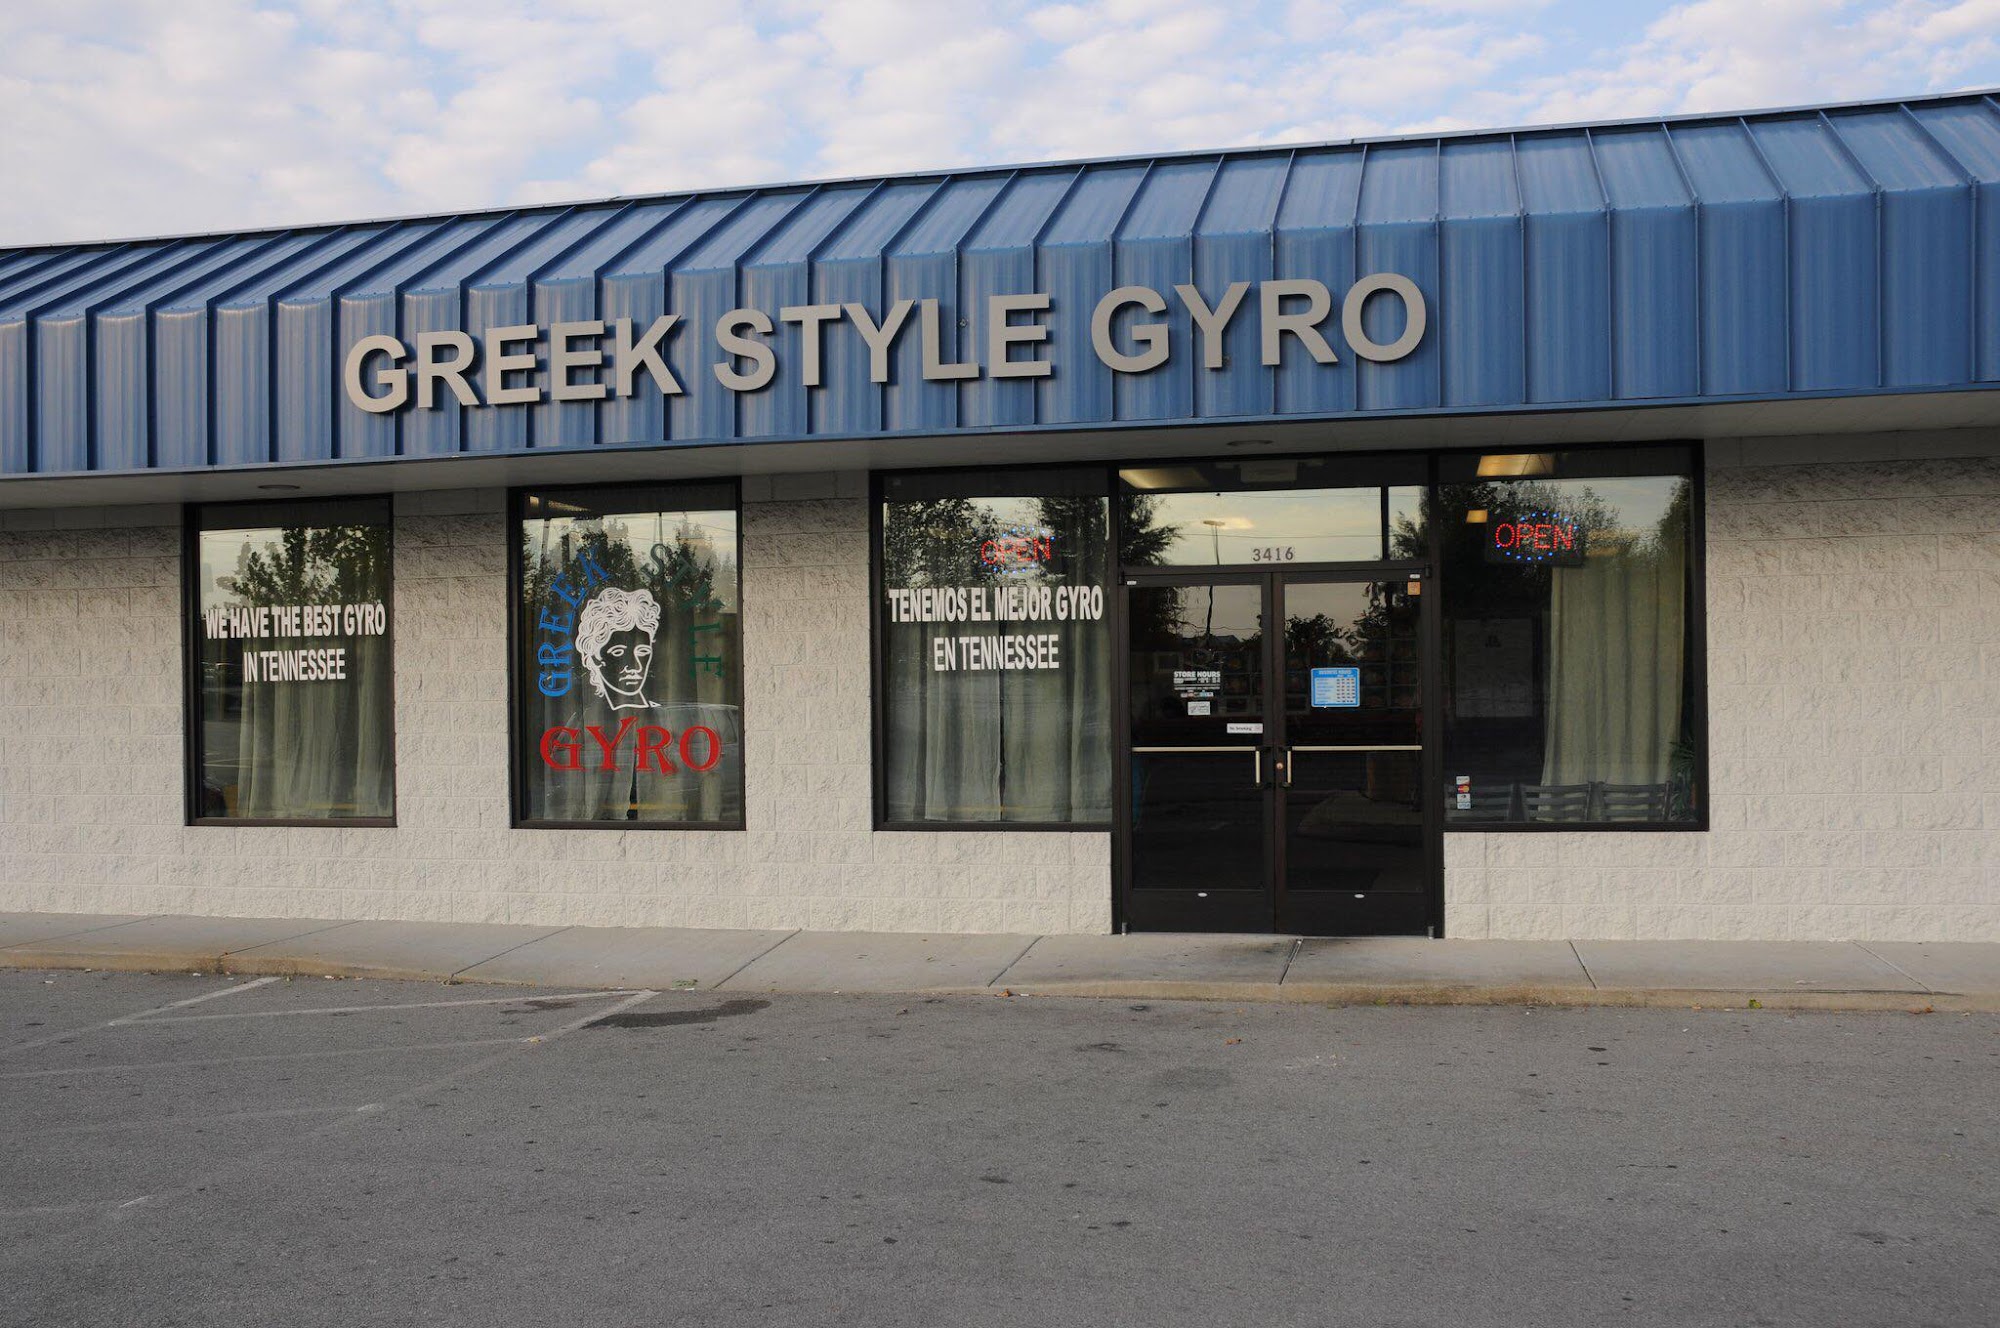 Greeks Style Gyro